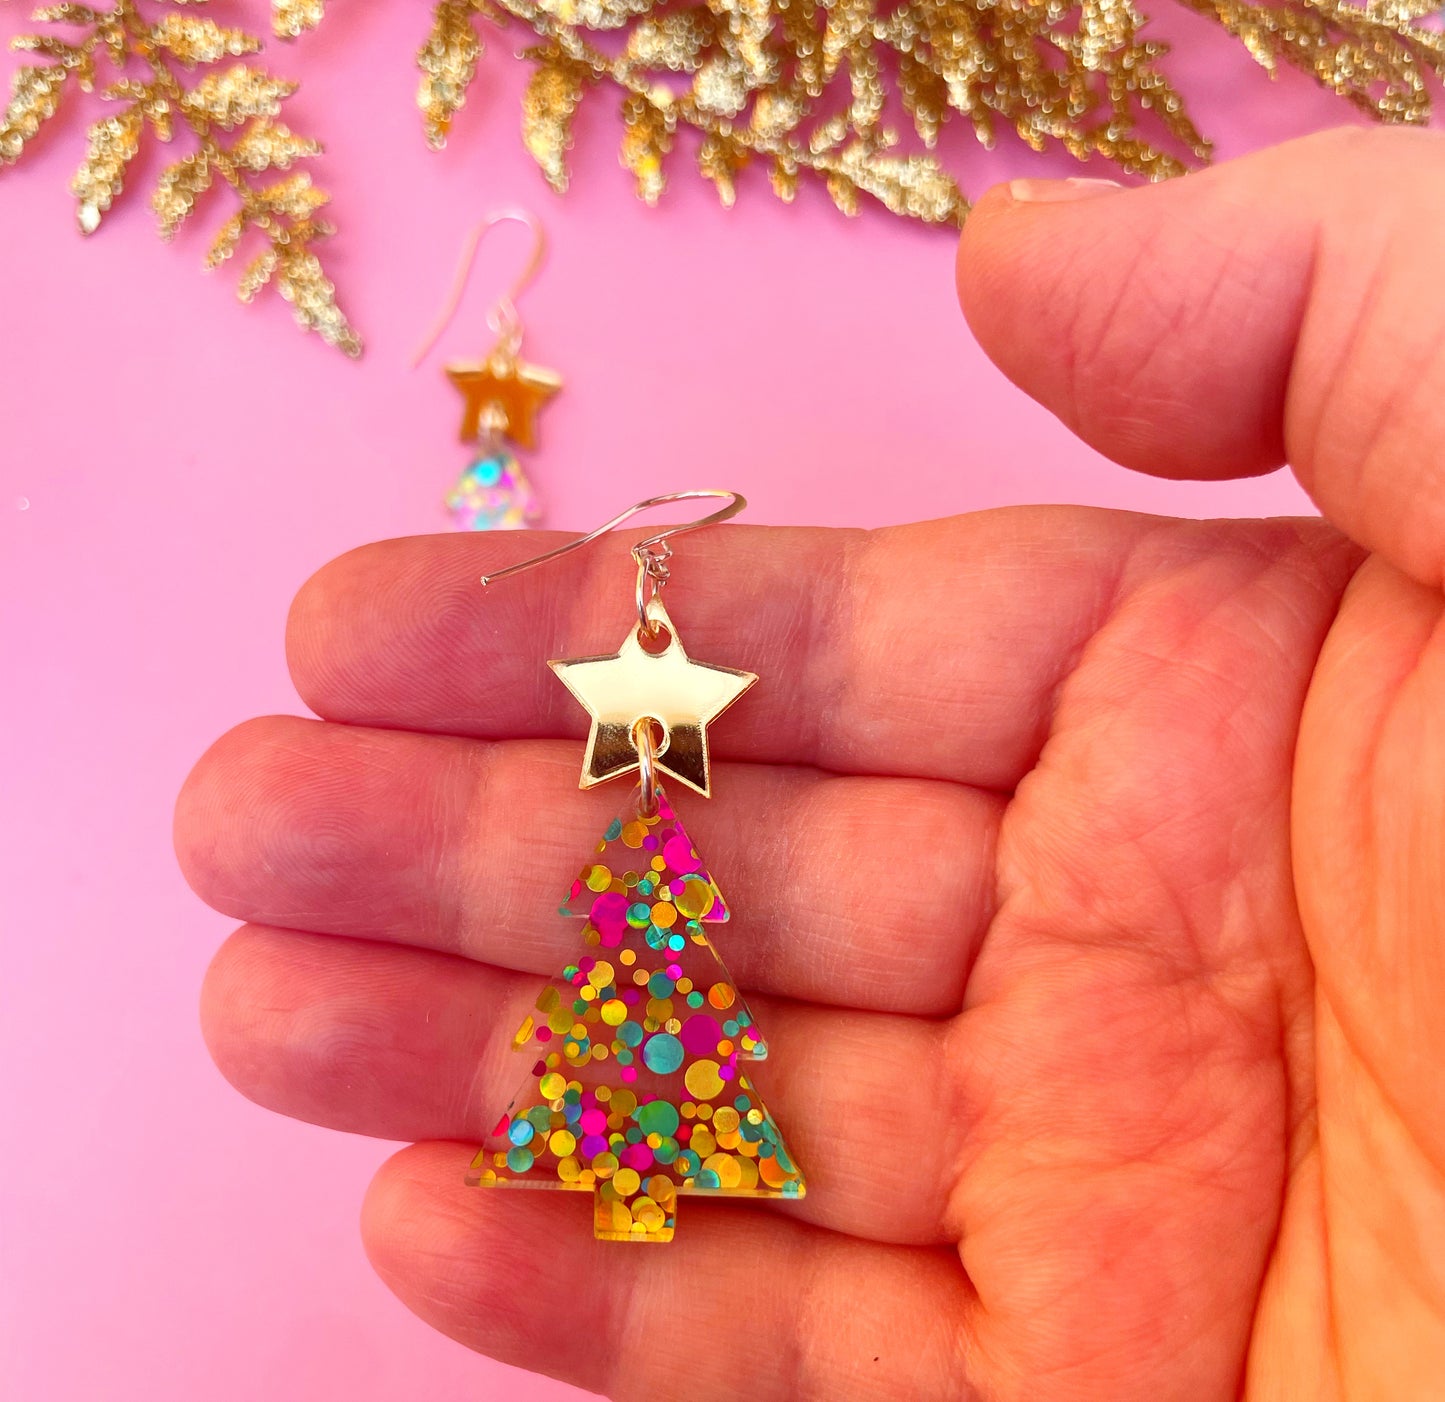 Happy Holiday Tree Earrings (in polka dot or green flecks)